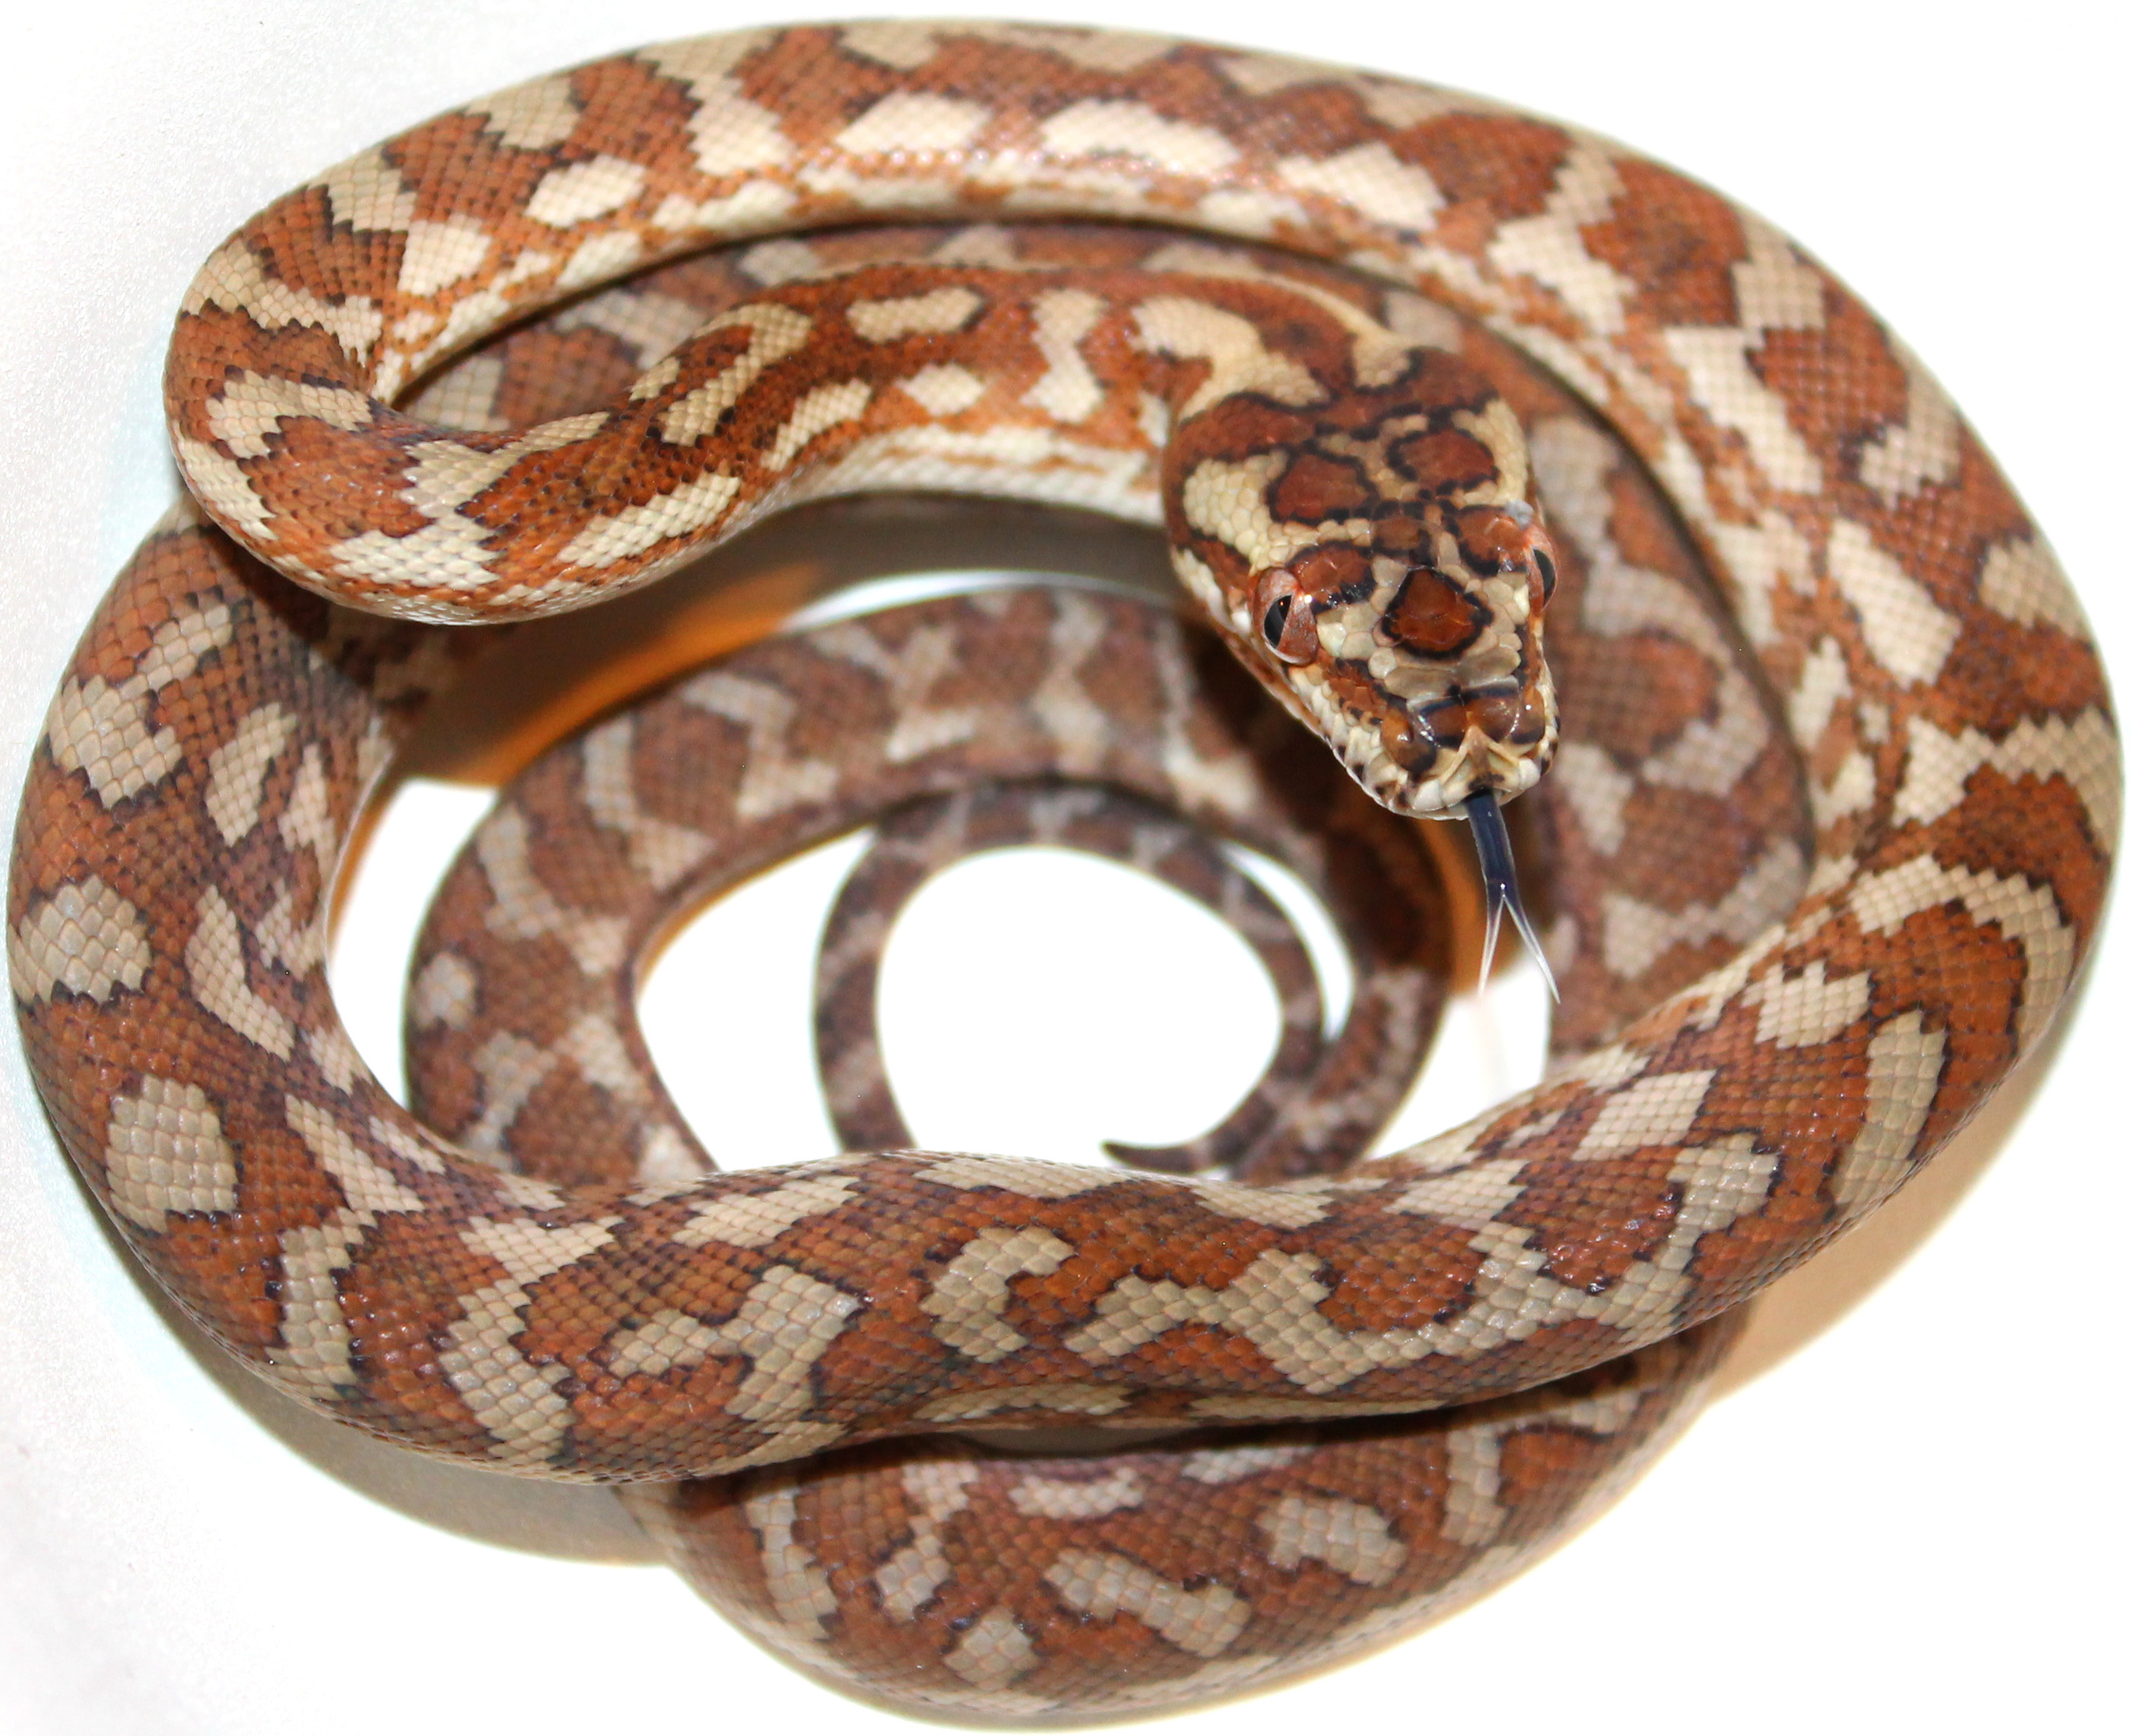 Female Caramel Coastal Carpet Python by Inland Reptile